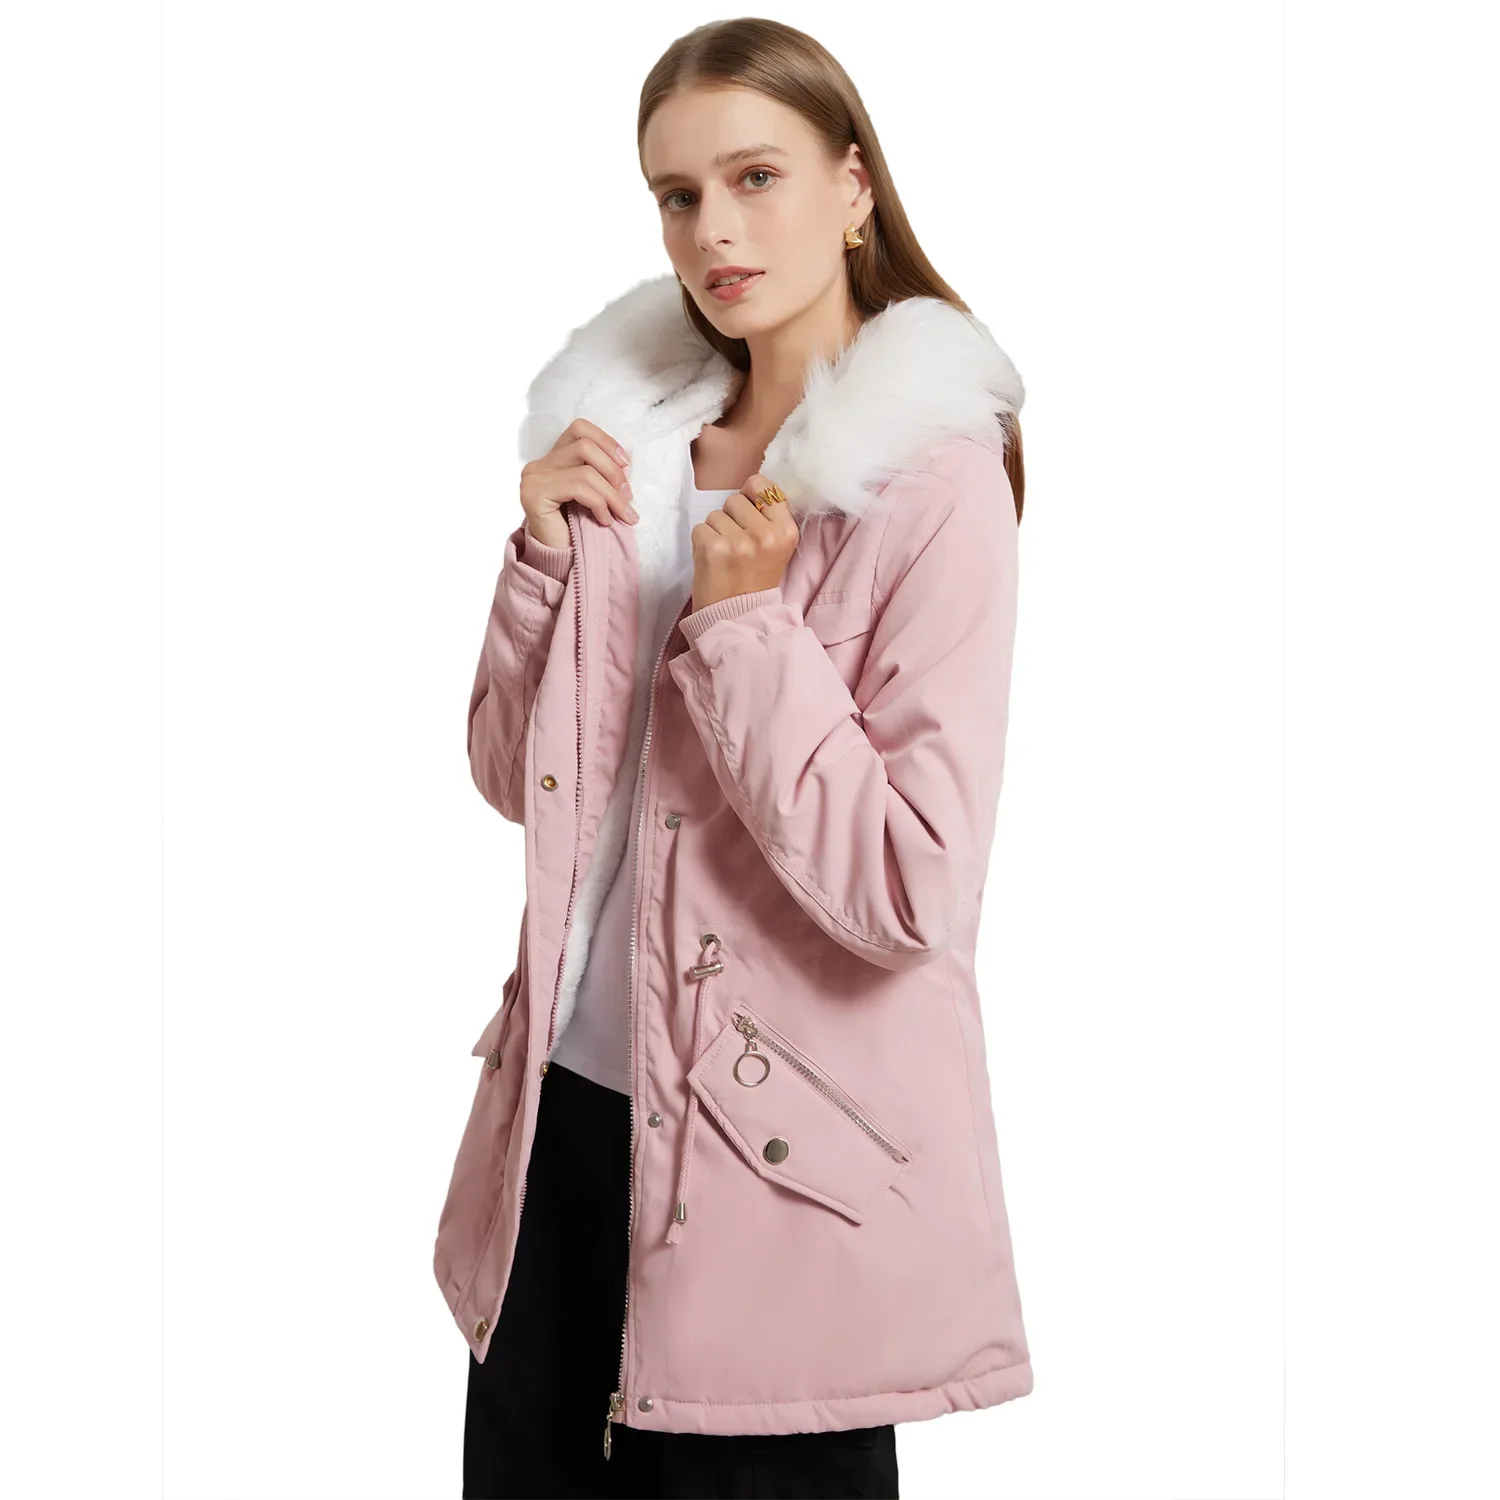 

Lined Coat Outwear Parkas Keep Warm with Fur Collar Trend Parkas Jackets Women's Mid-Length Fleece Loose Winter Coats Overcoats